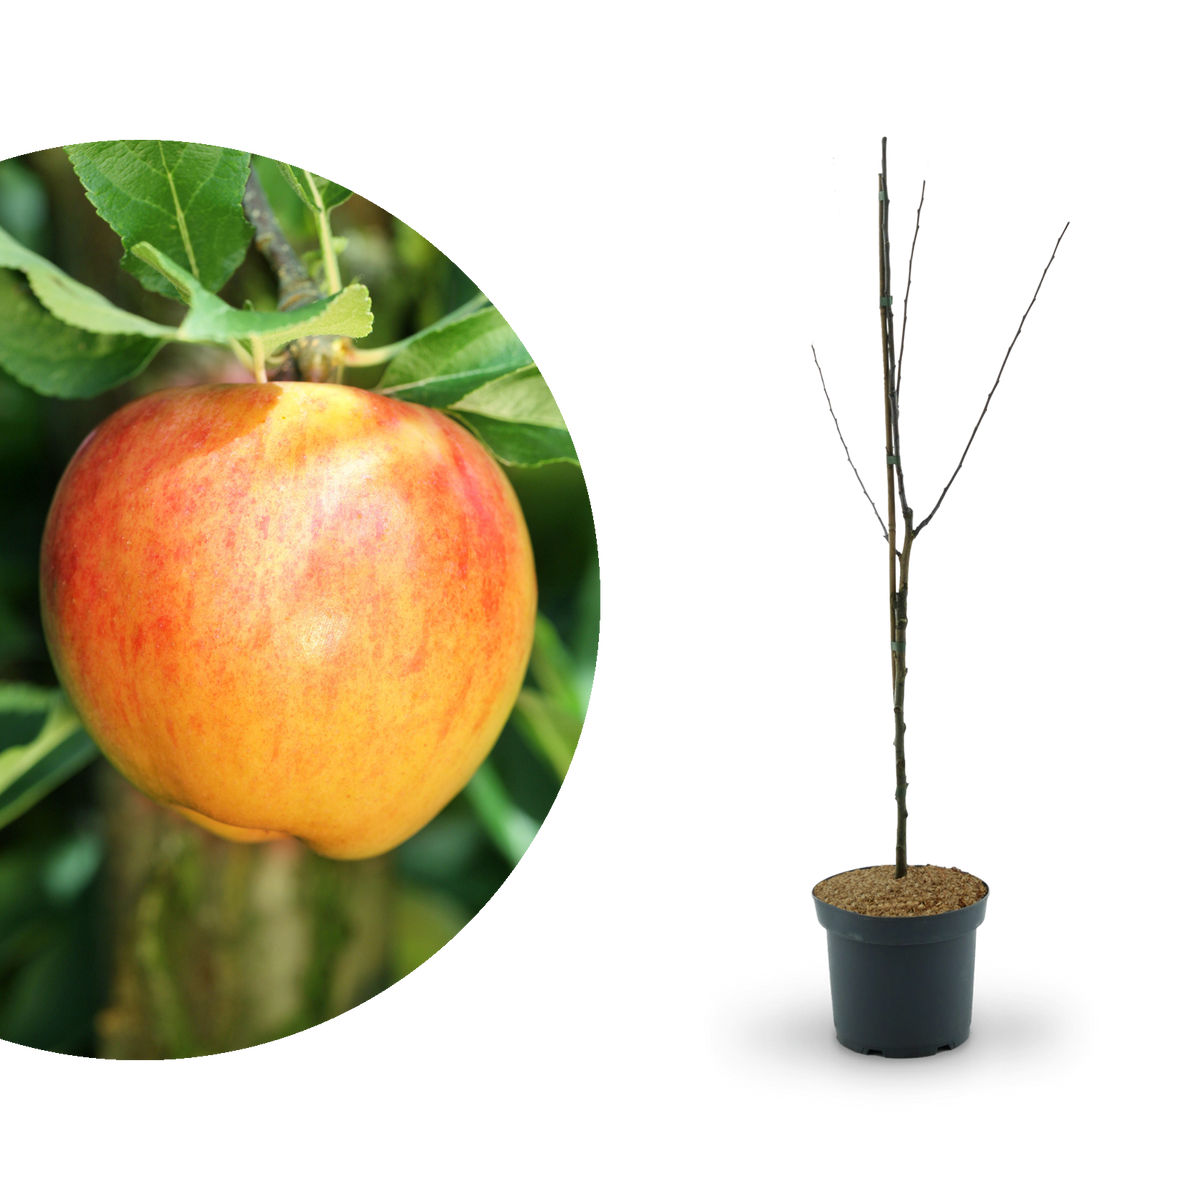 Bio-Apfelbaum ‘Alkmene’ Herbstapfel